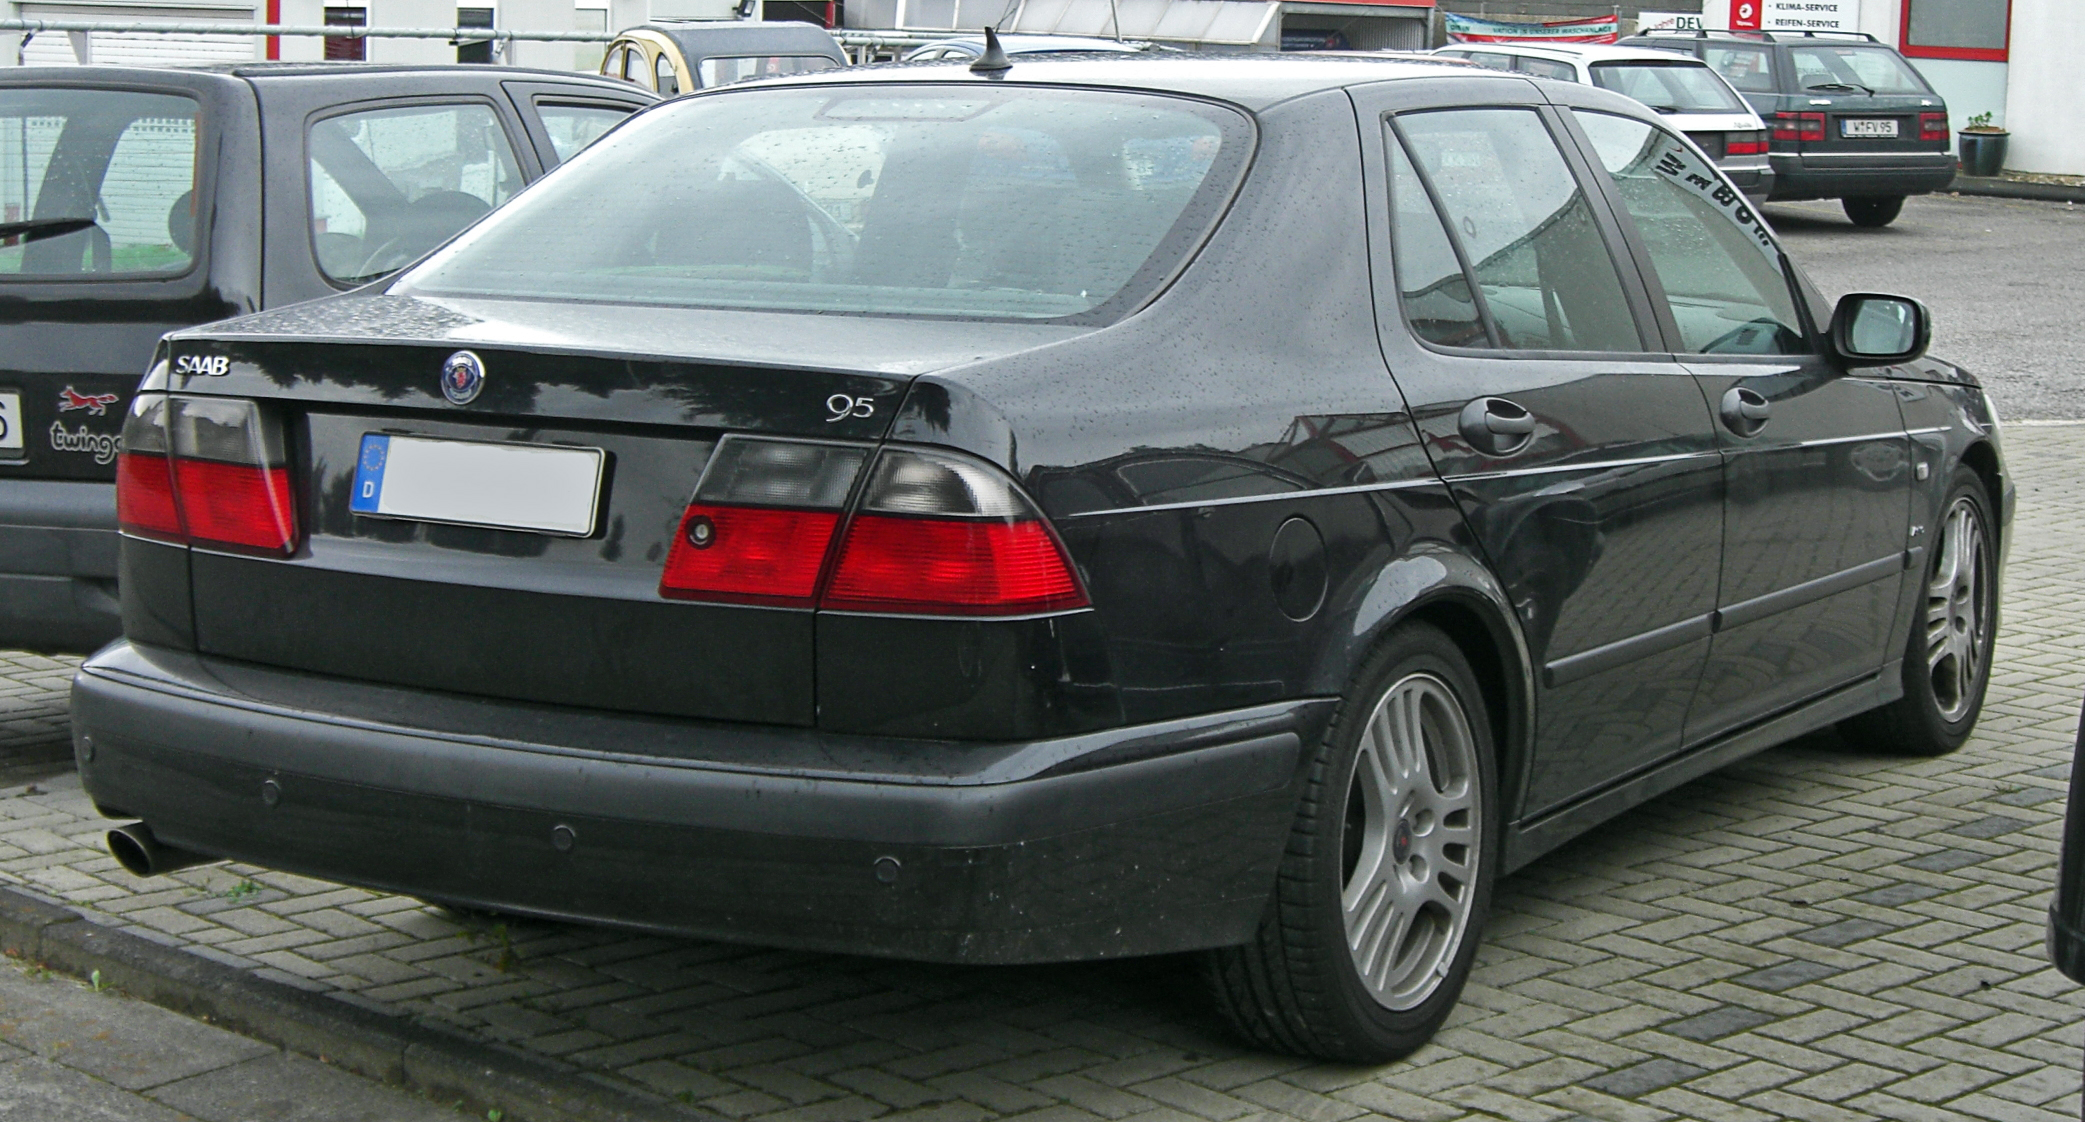 File:Saab 9-5 (1997-2002) rear.JPG - Wikimedia Commons